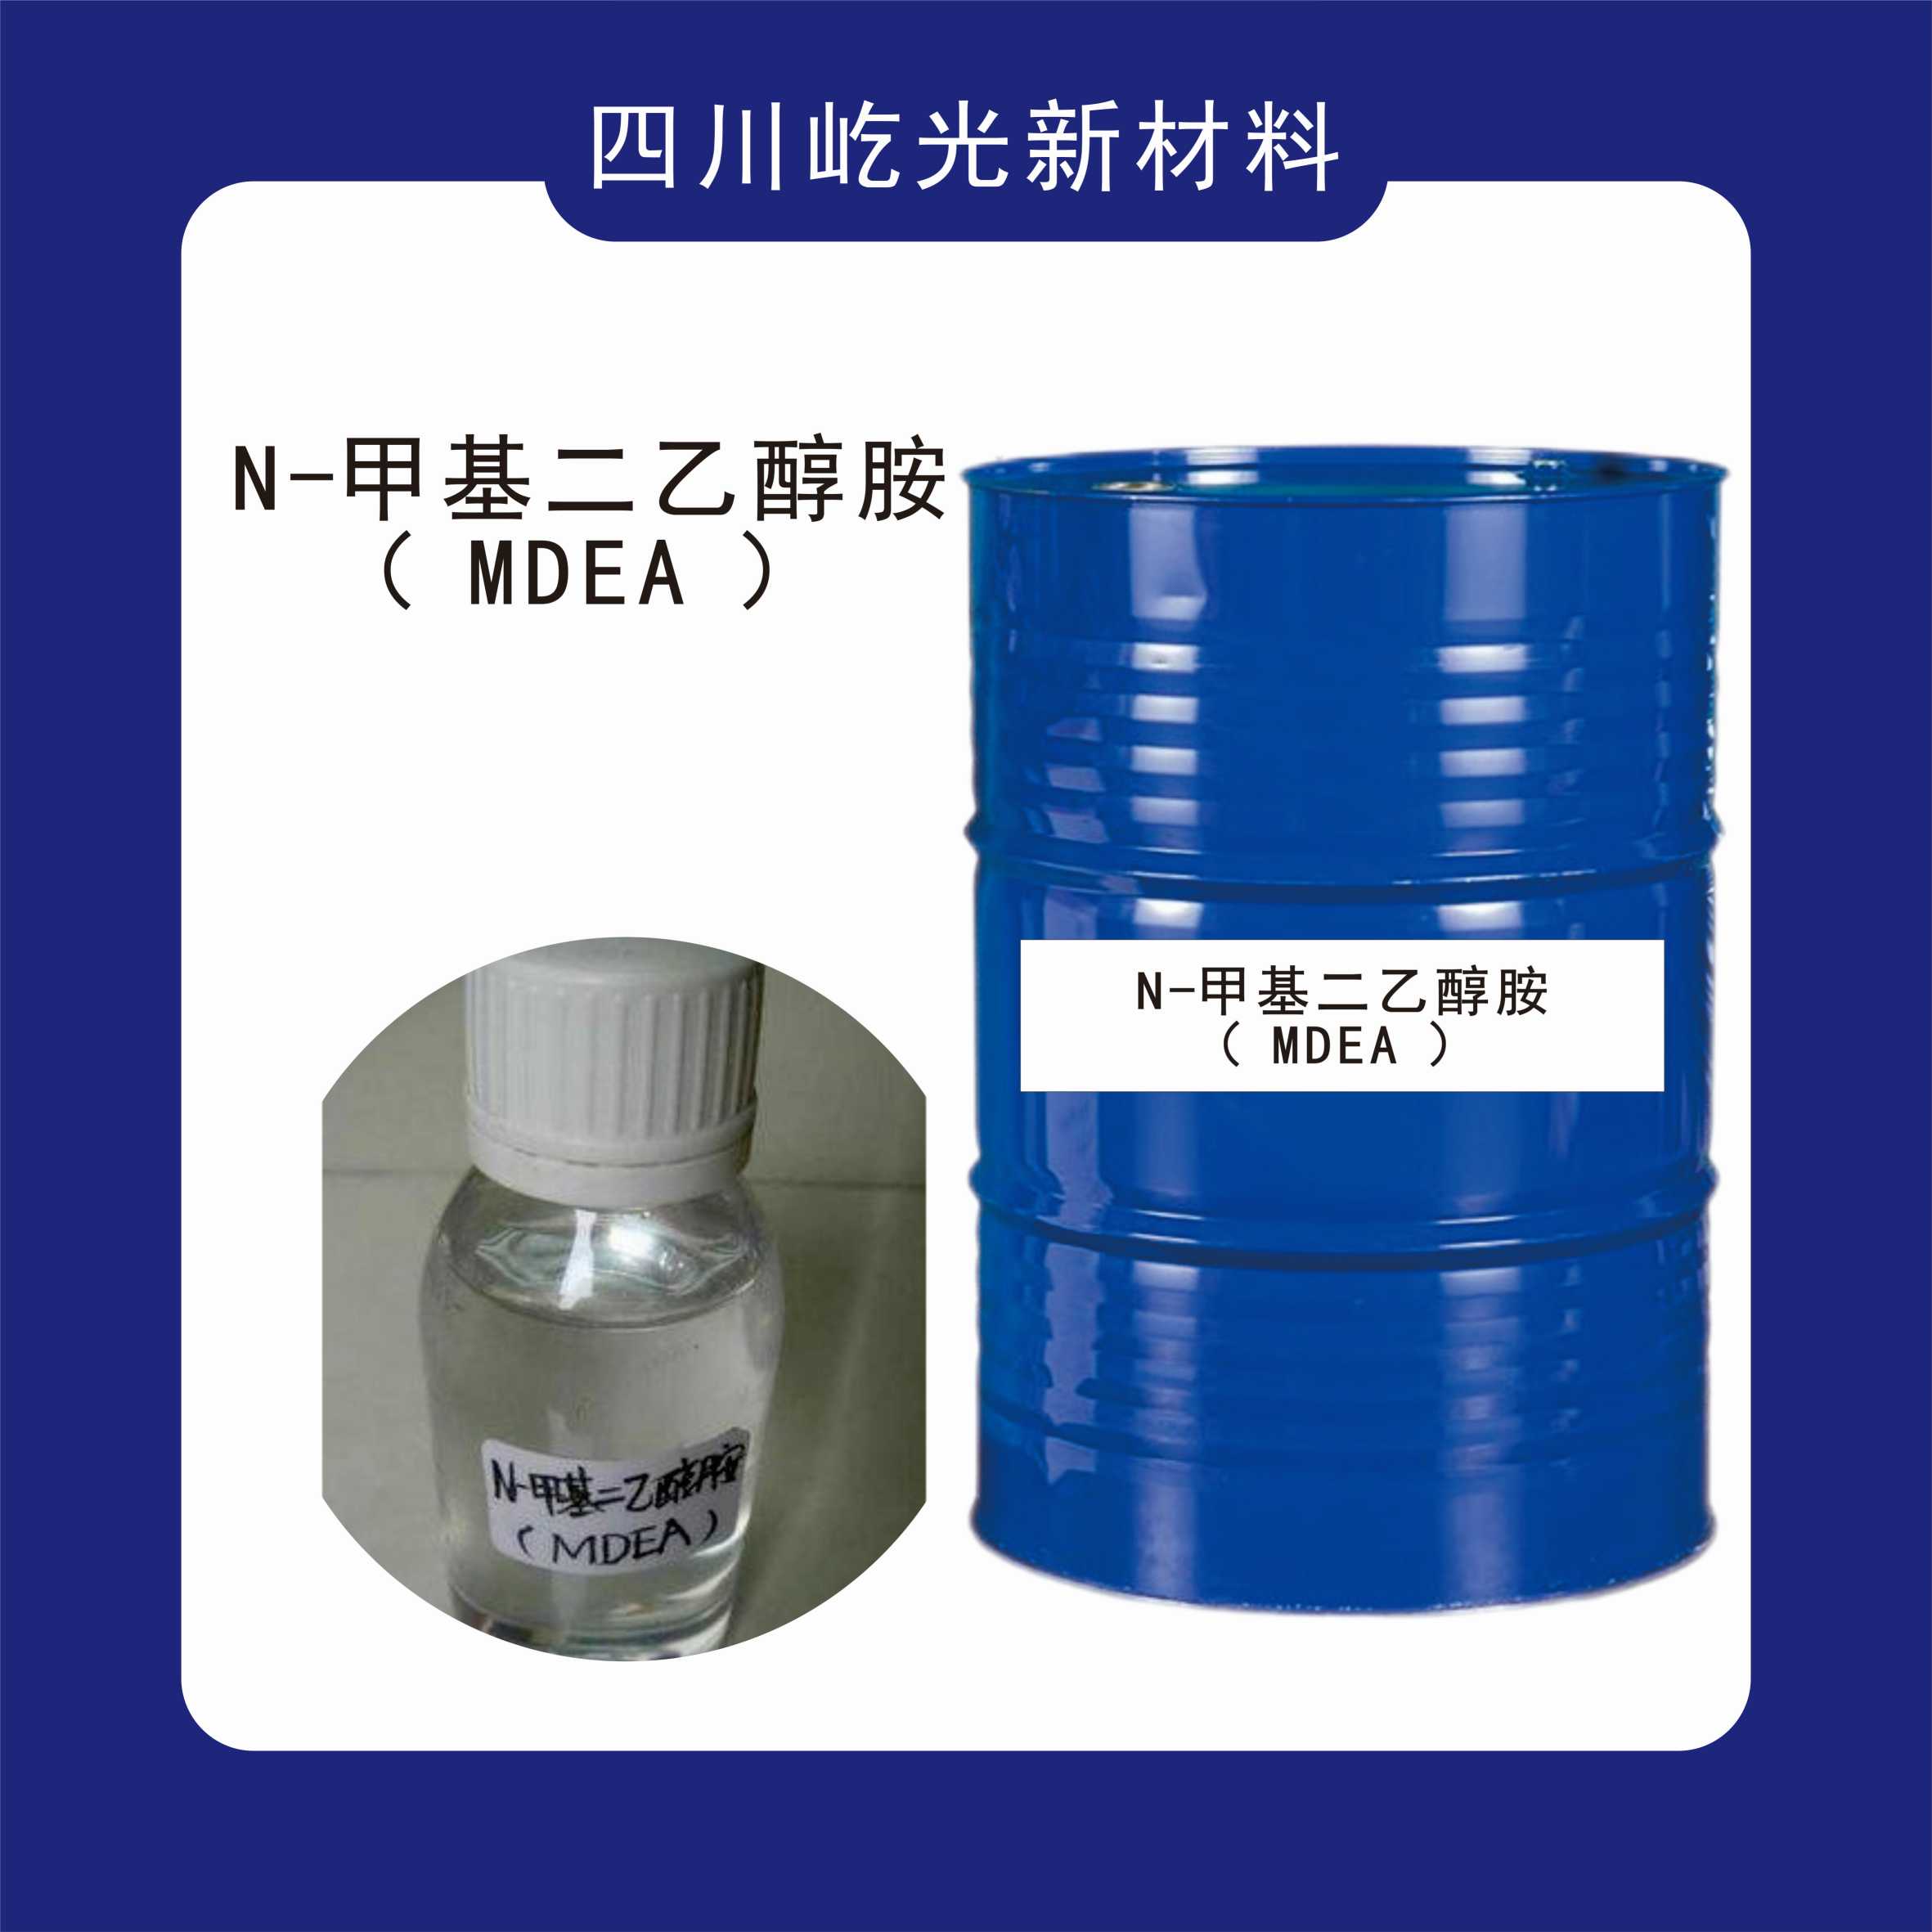 N-甲基二乙醇胺(MDEA)